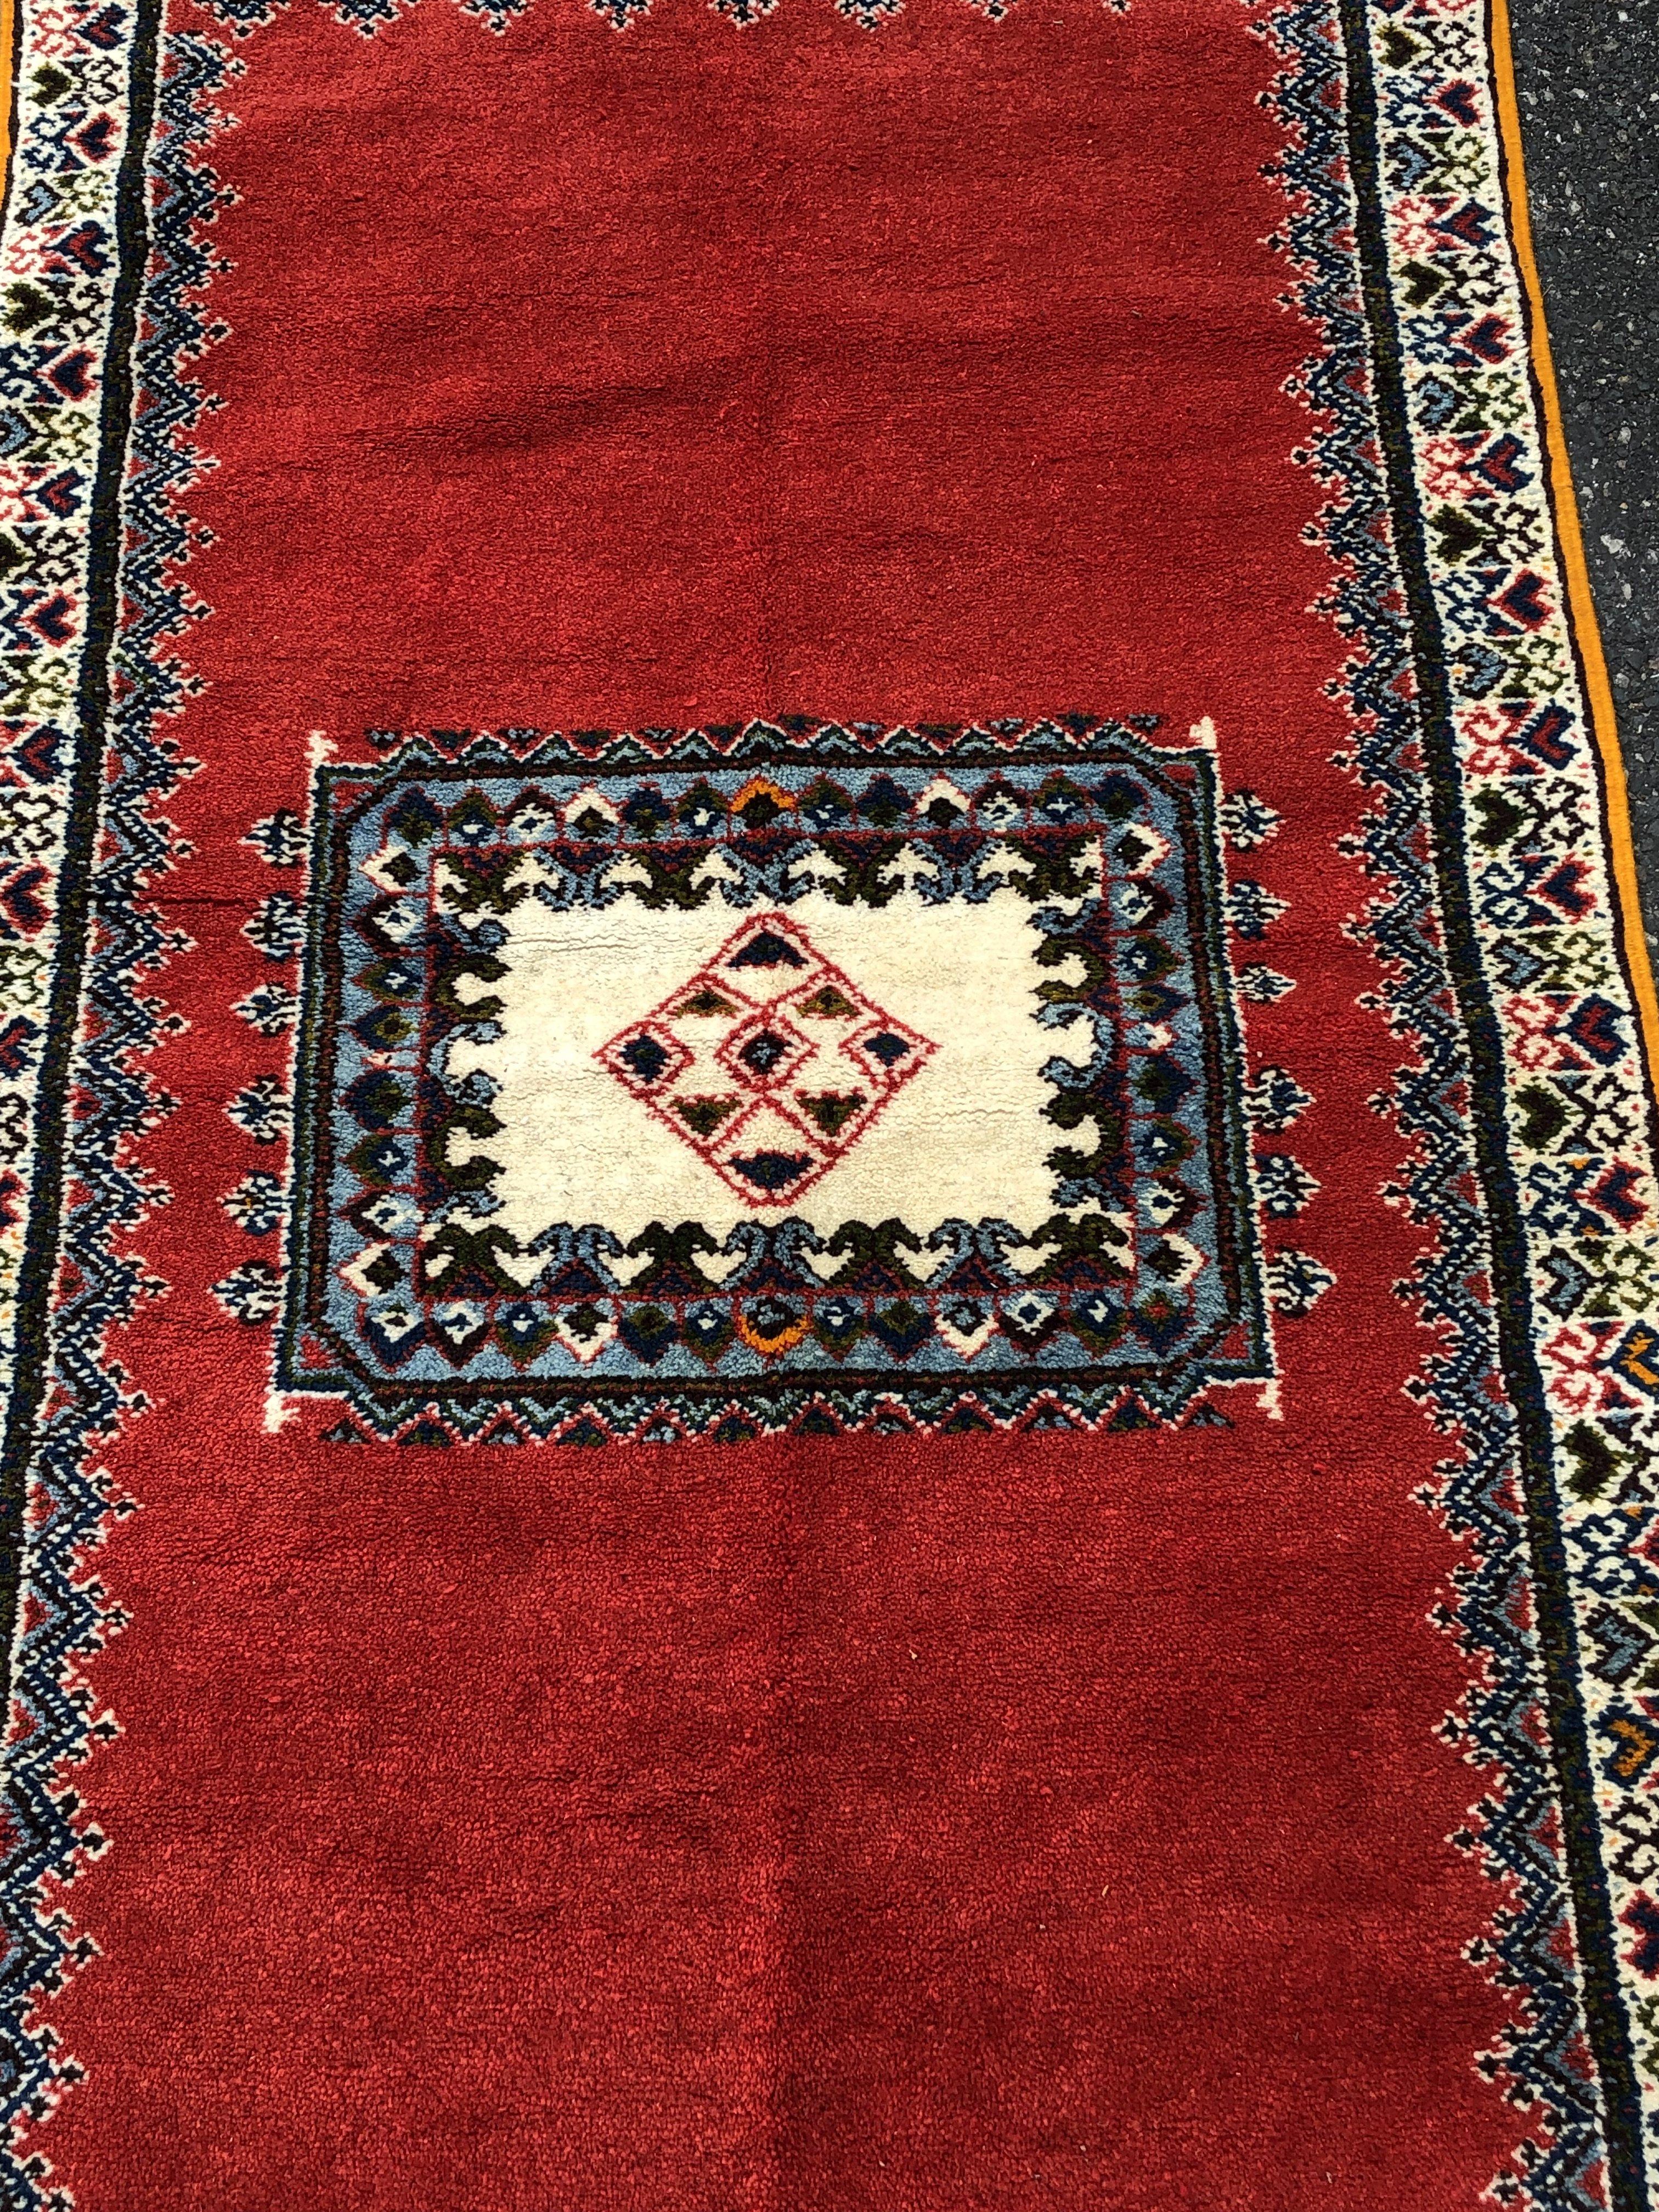 Hand-Woven Vintage Tribal Moroccan Red Handwoven Rectangular Wool Rug, Carpet